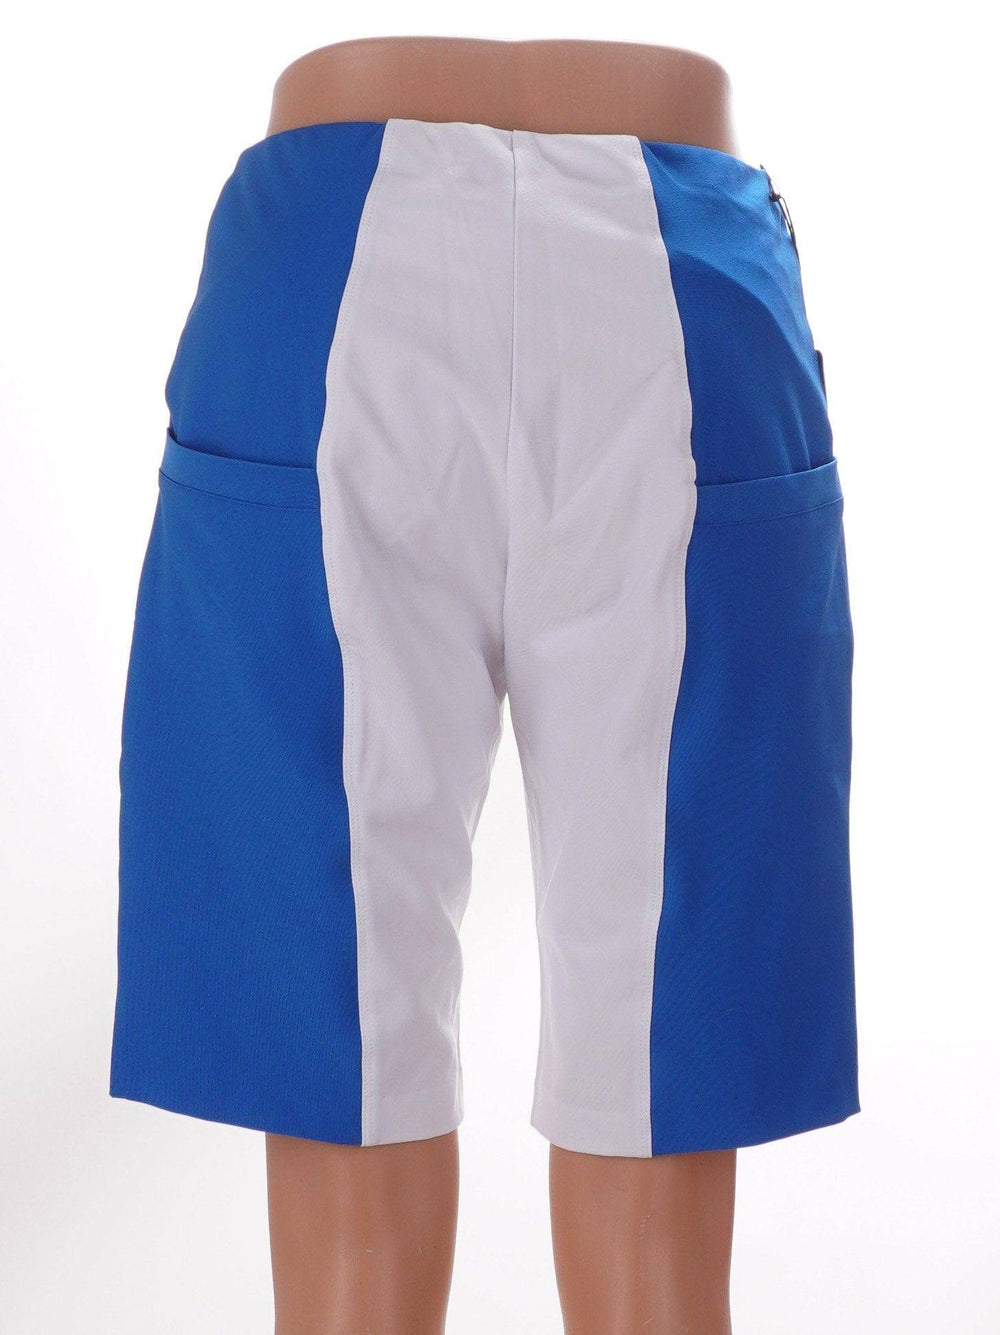 Tail Blue / 6 Tail Shorts - Split Panel - Size 6